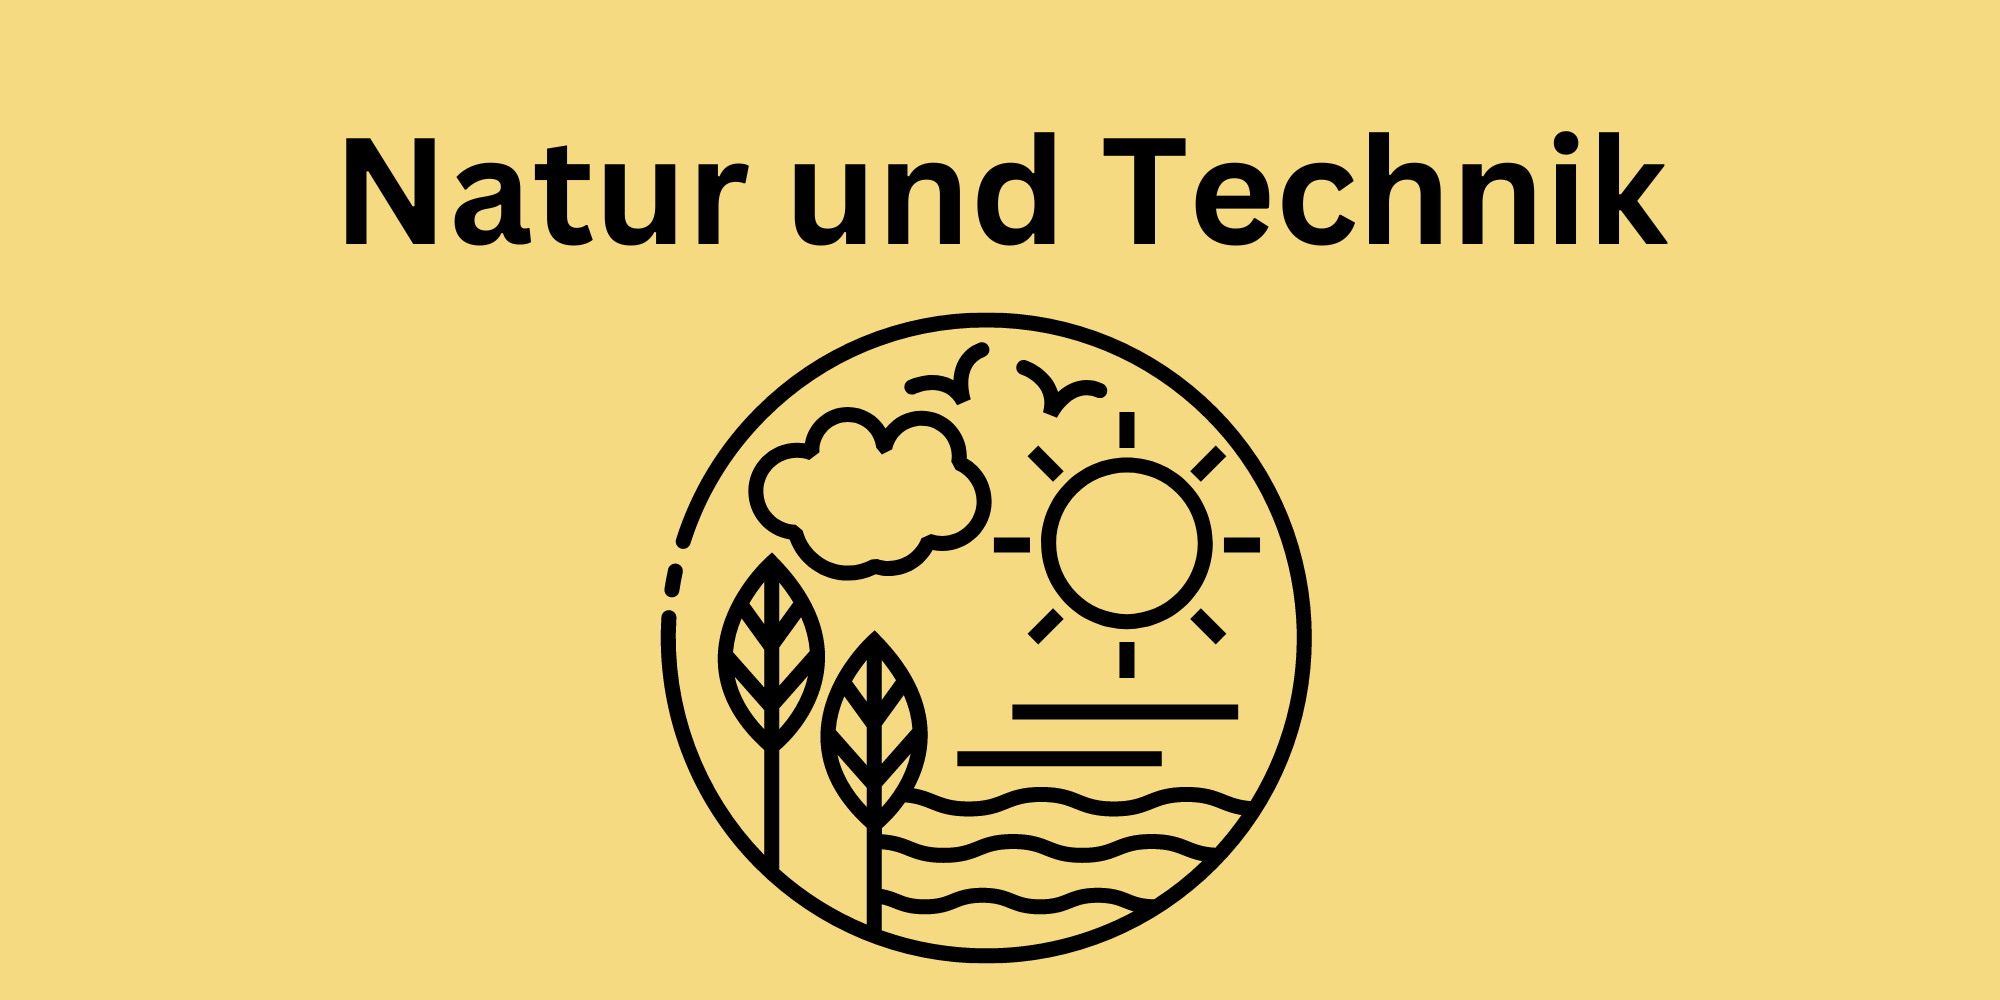 Natur und Technik.png